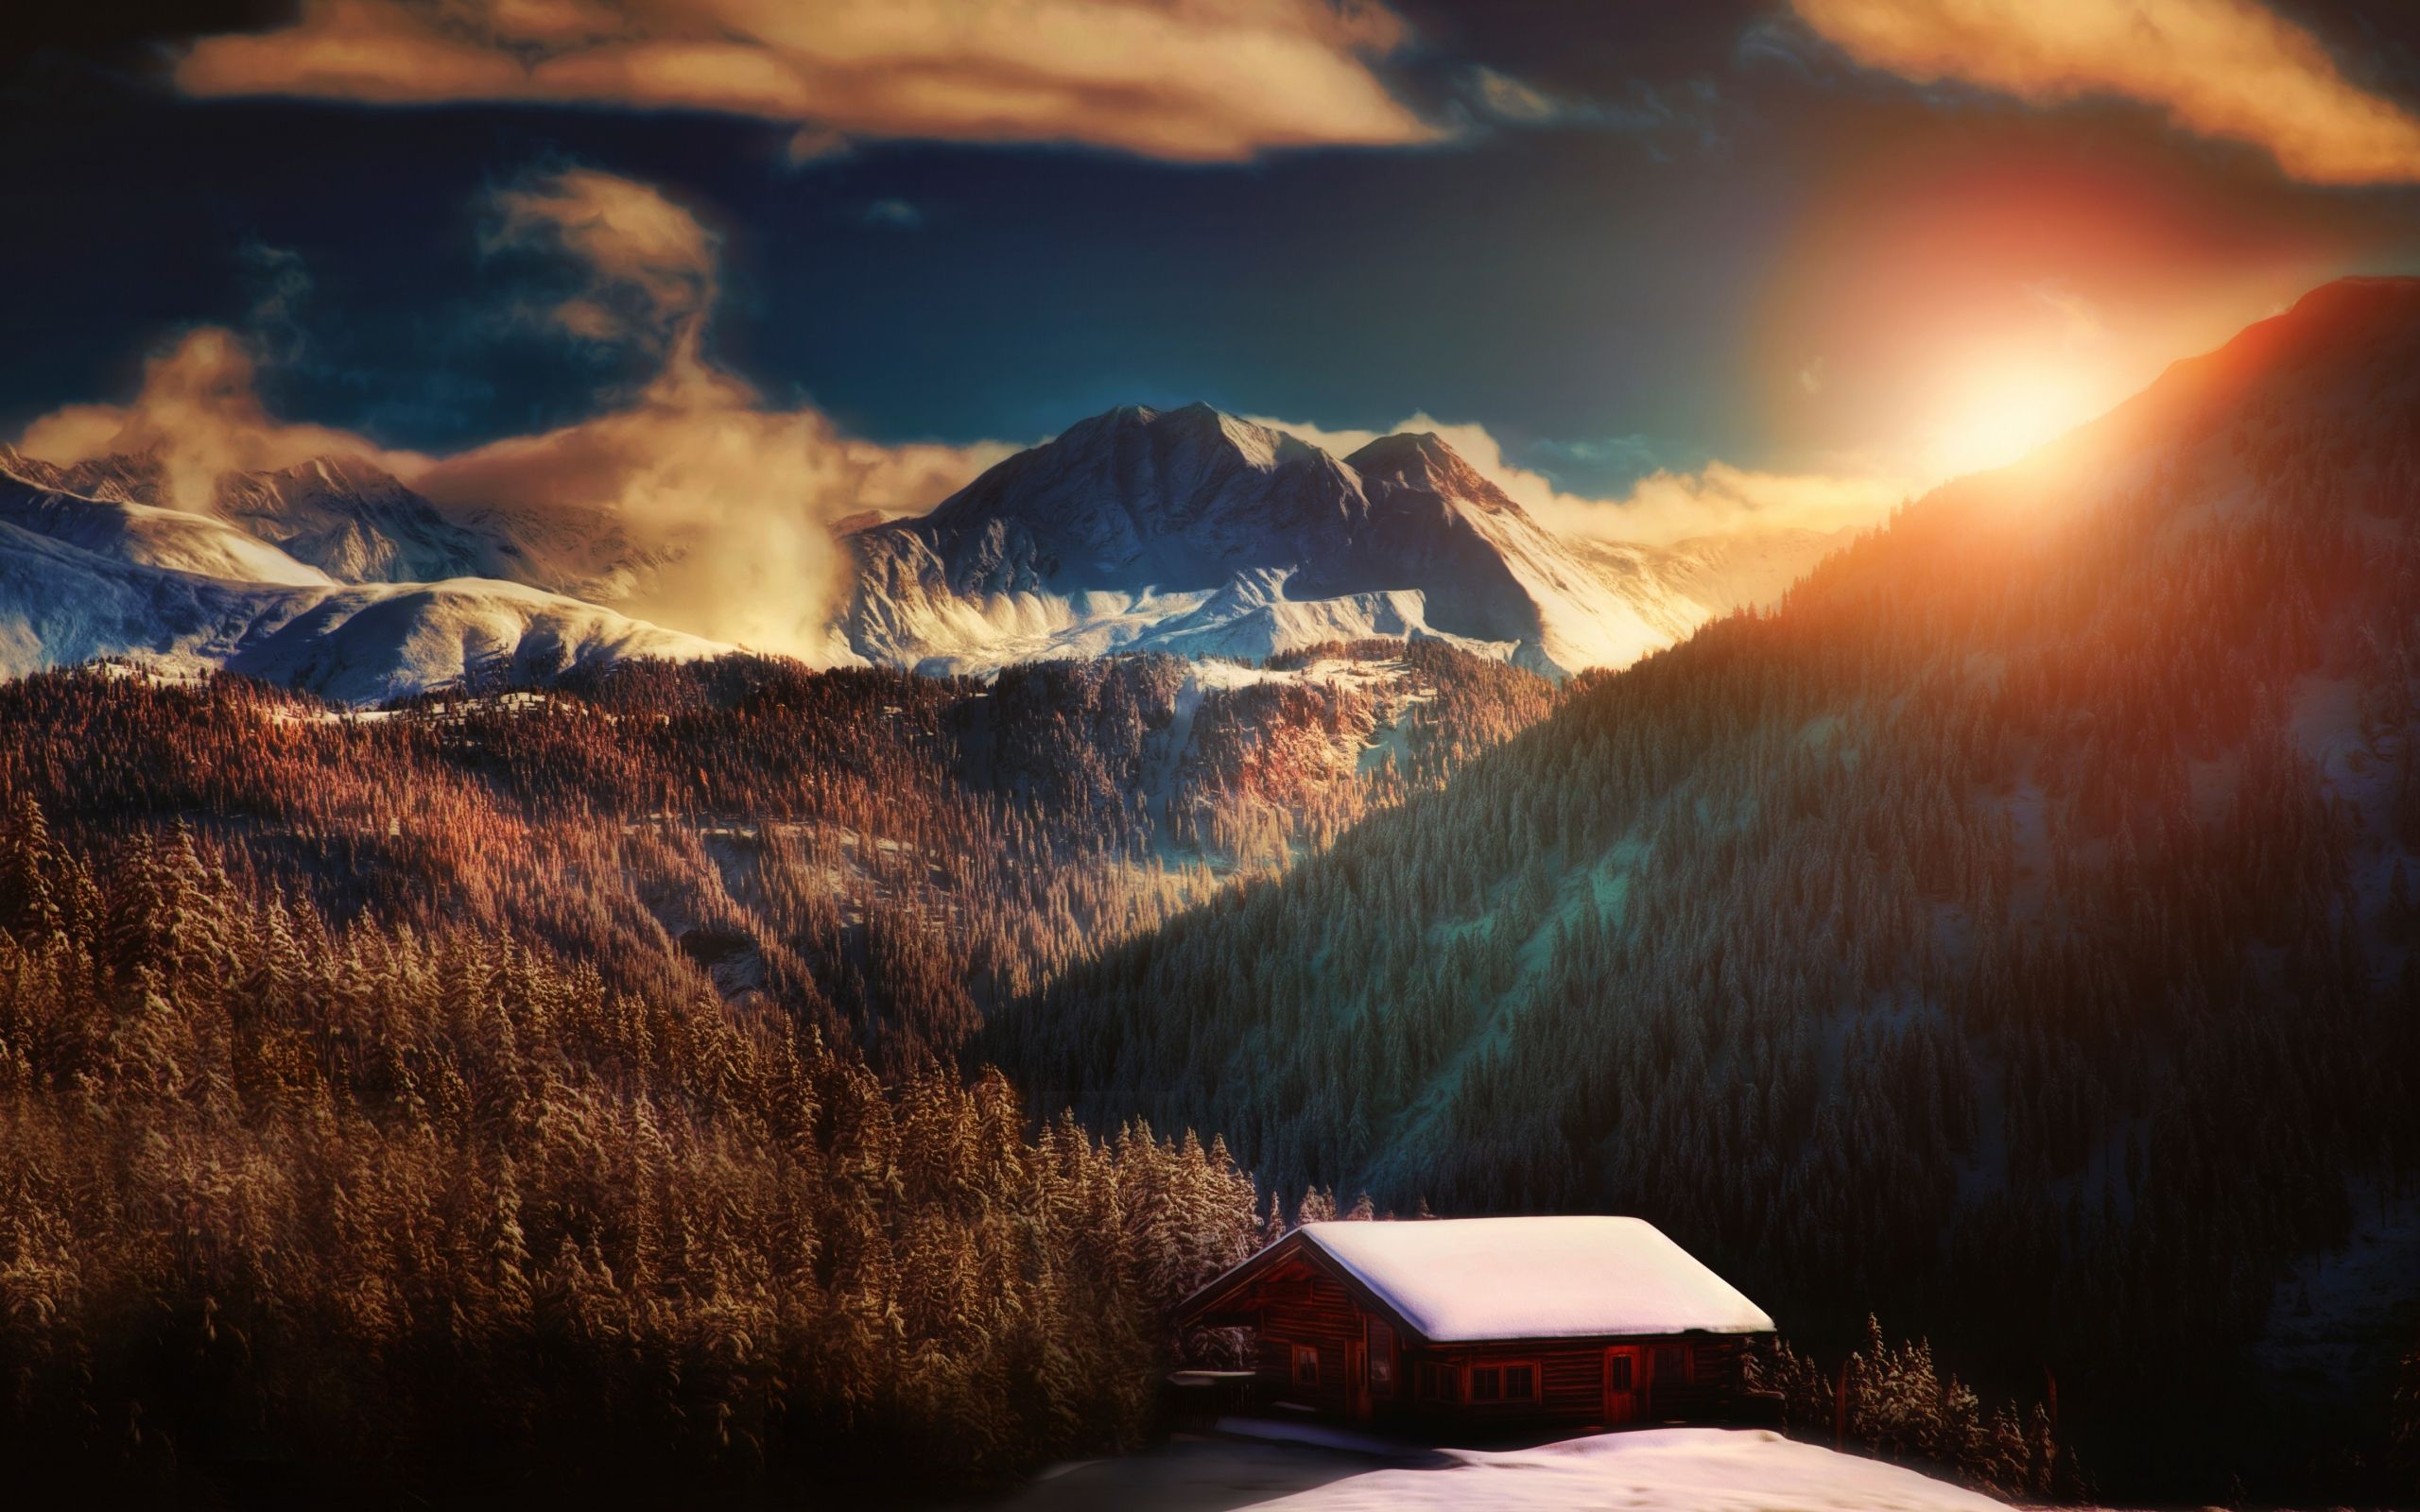 Download Alps, 5k, 4k wallpaper, 8k, France, mountain, sunset